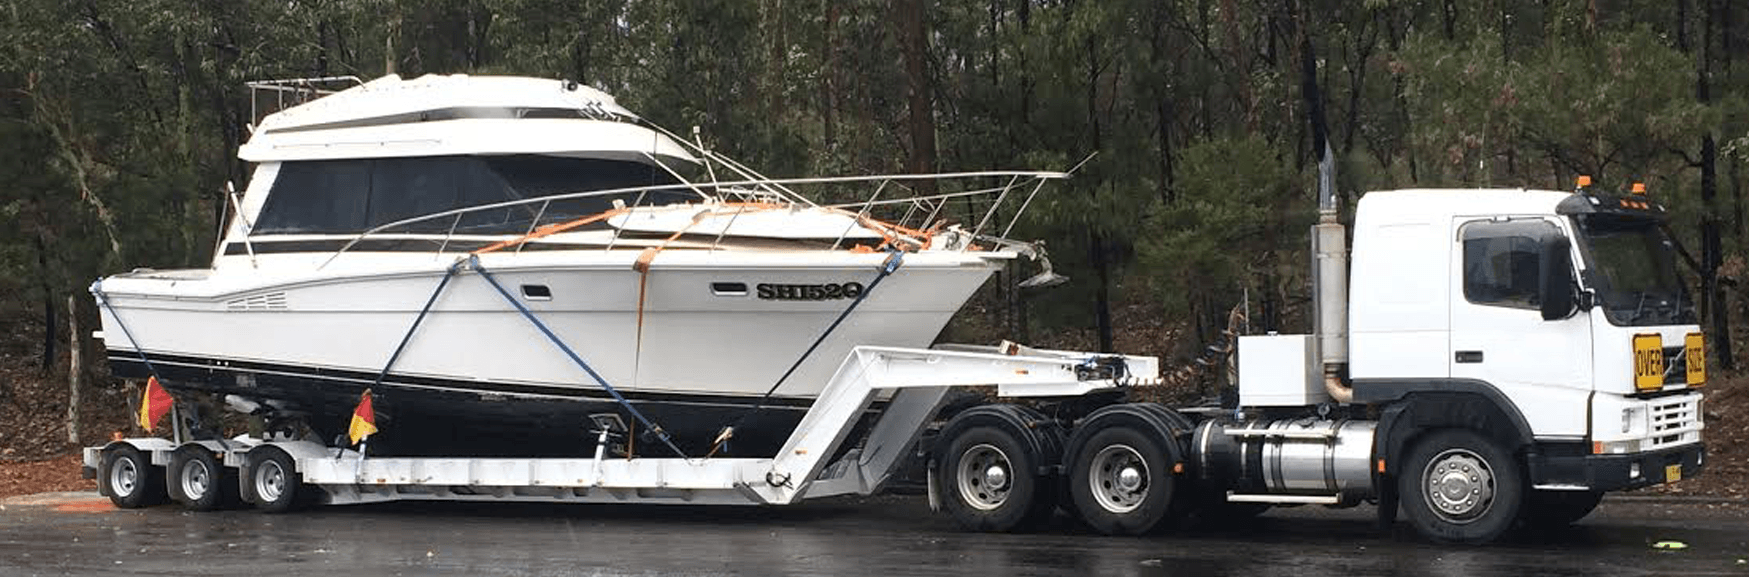 Boat Hauling Auto Transport Services | Genius Auto Trans